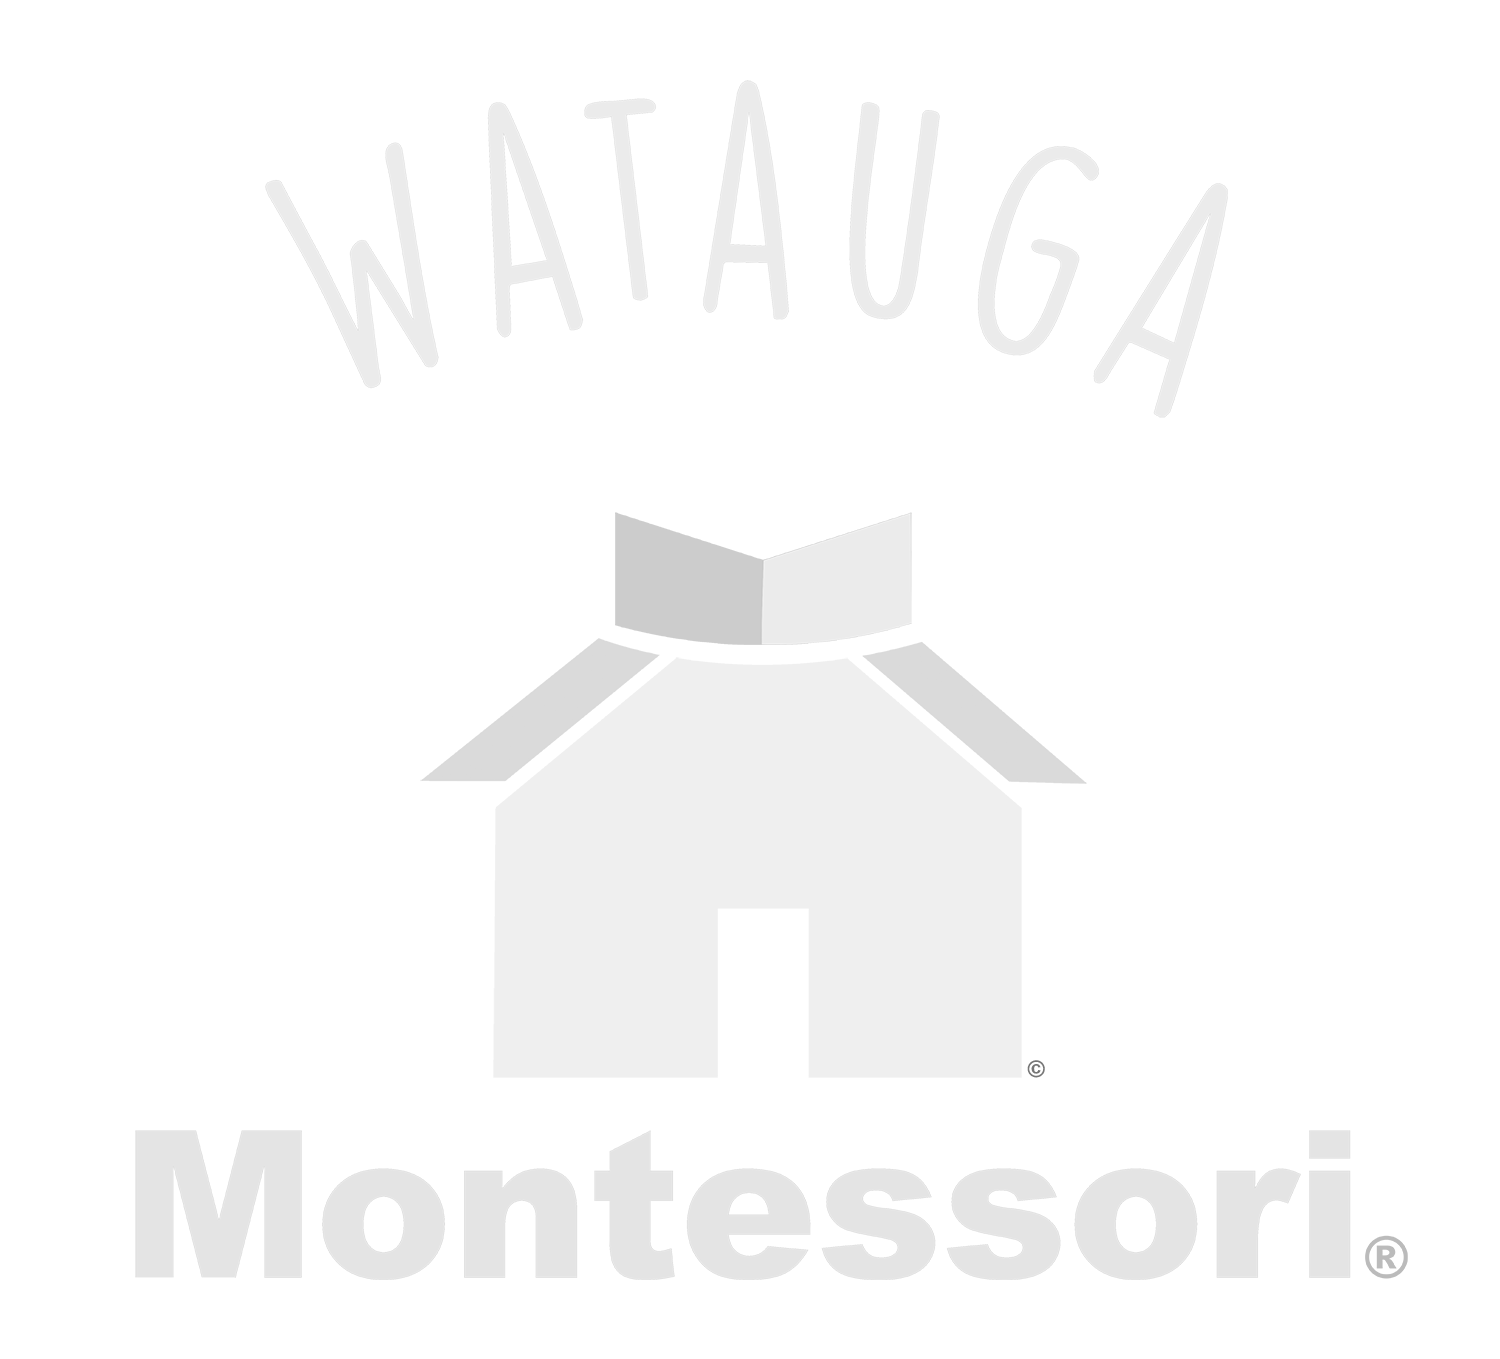 Watauga Montessori